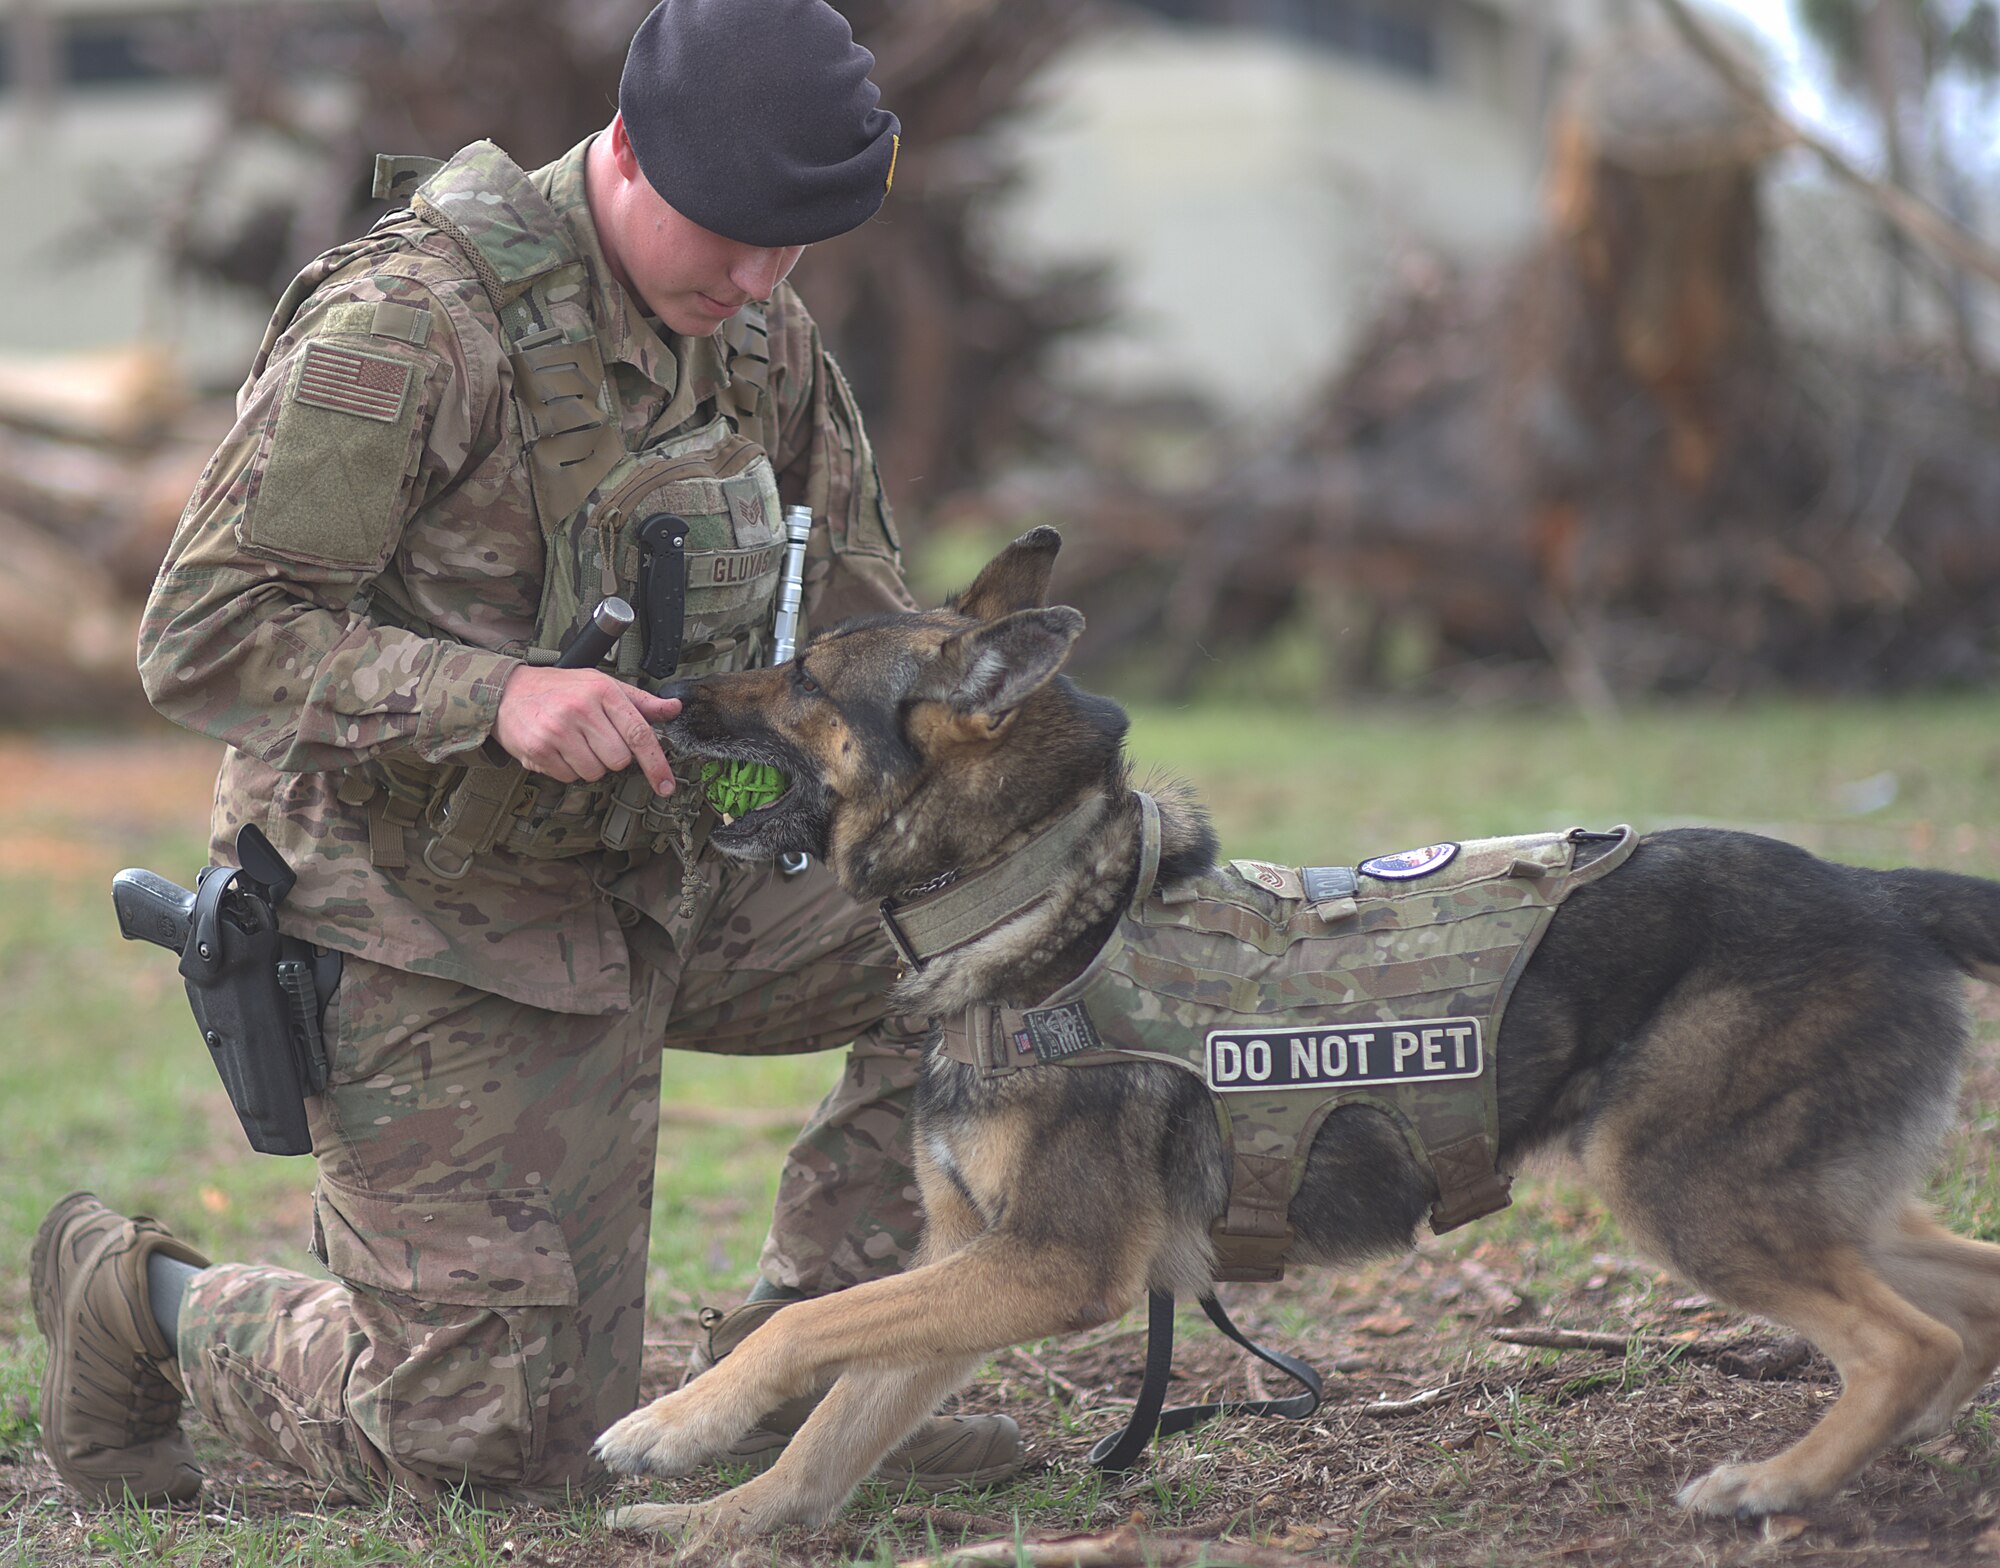 Military working dog